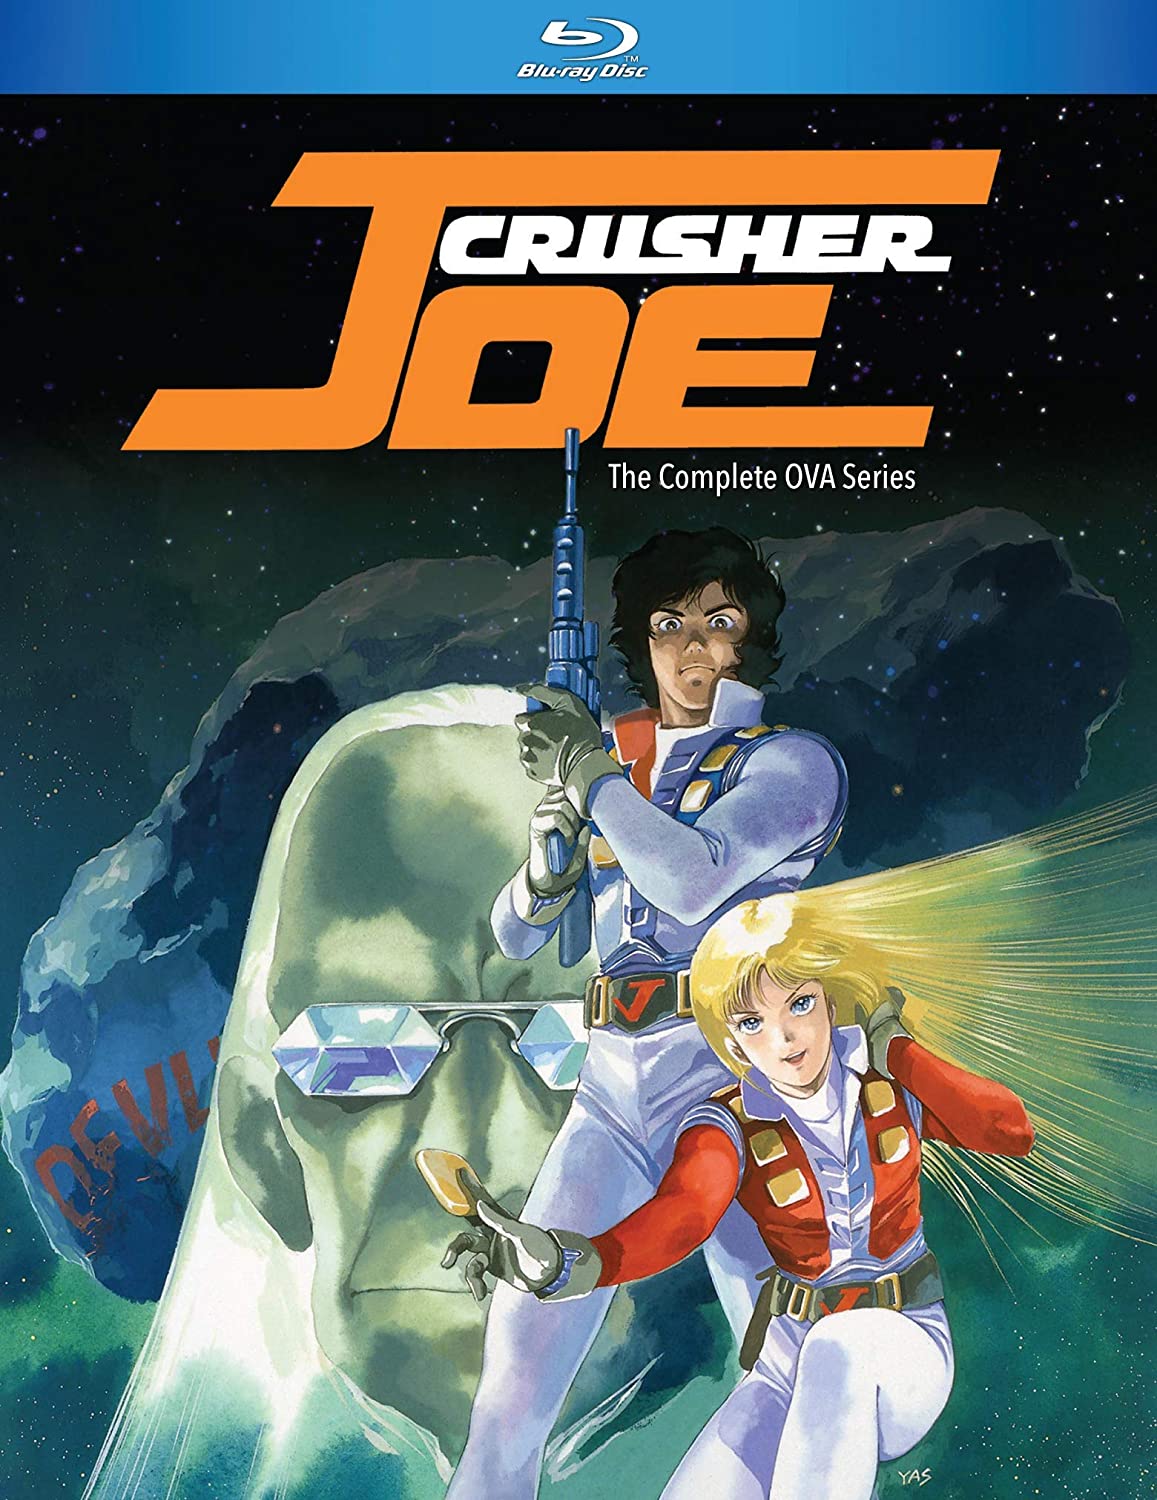 Crusher Joe OVA